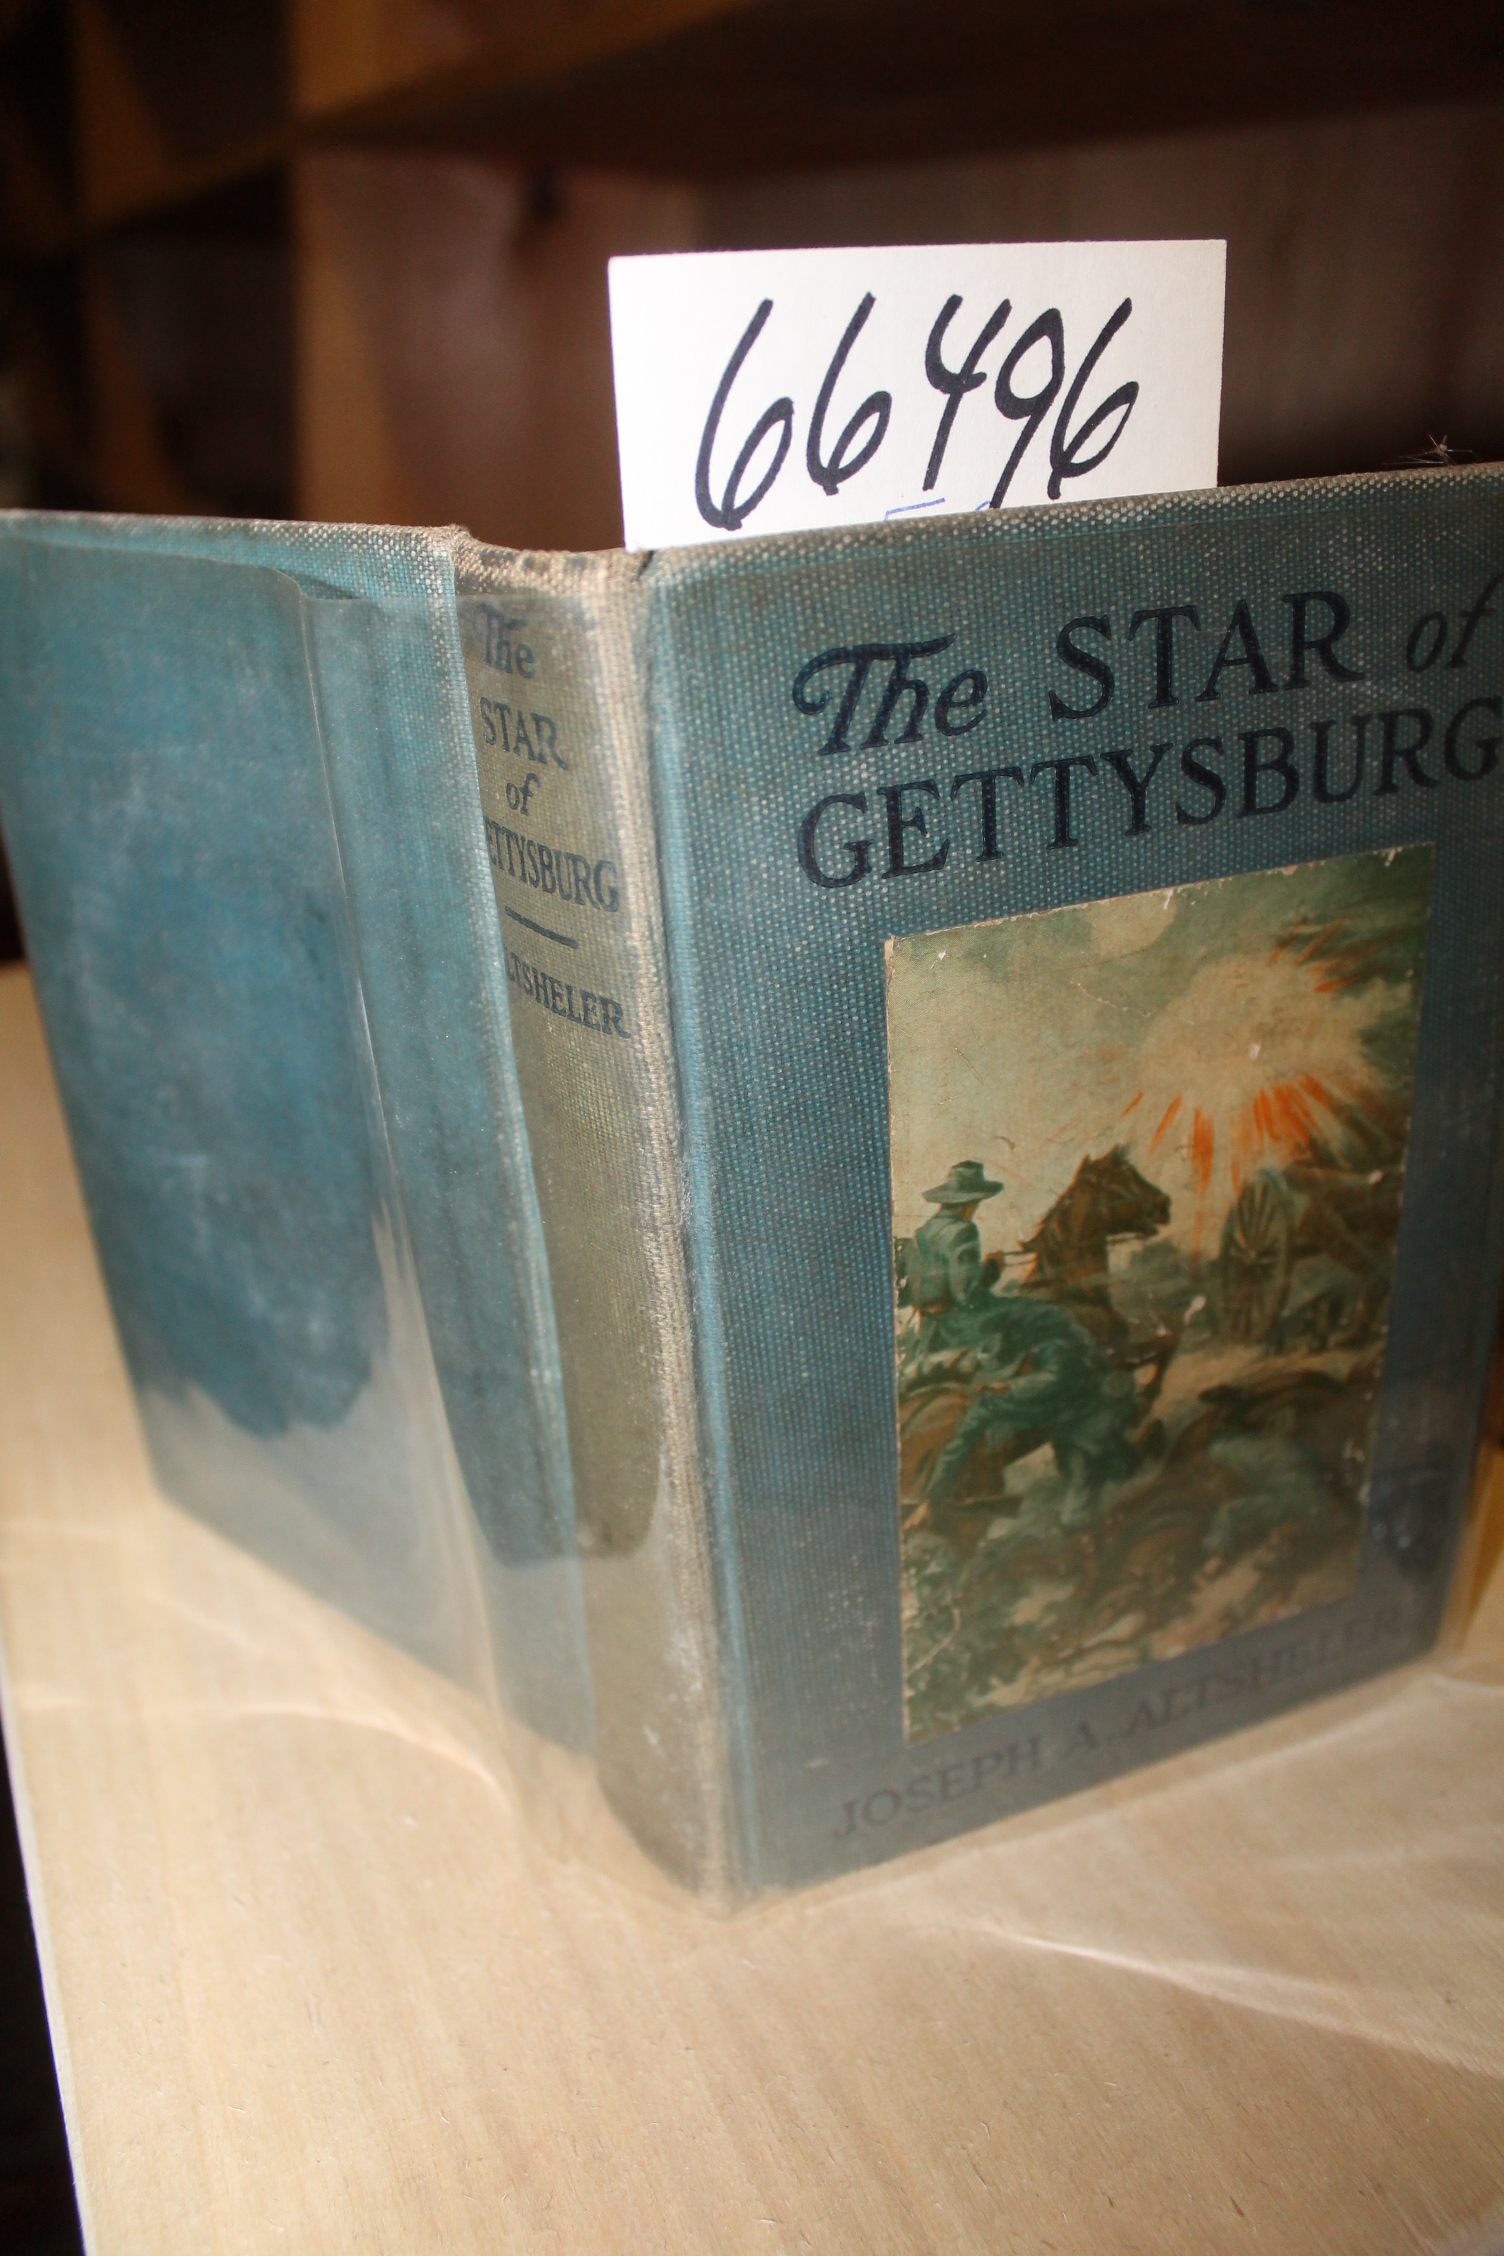 Altsheler, Joseph A: Star of Gettysburg: A Story of Southern High Tide